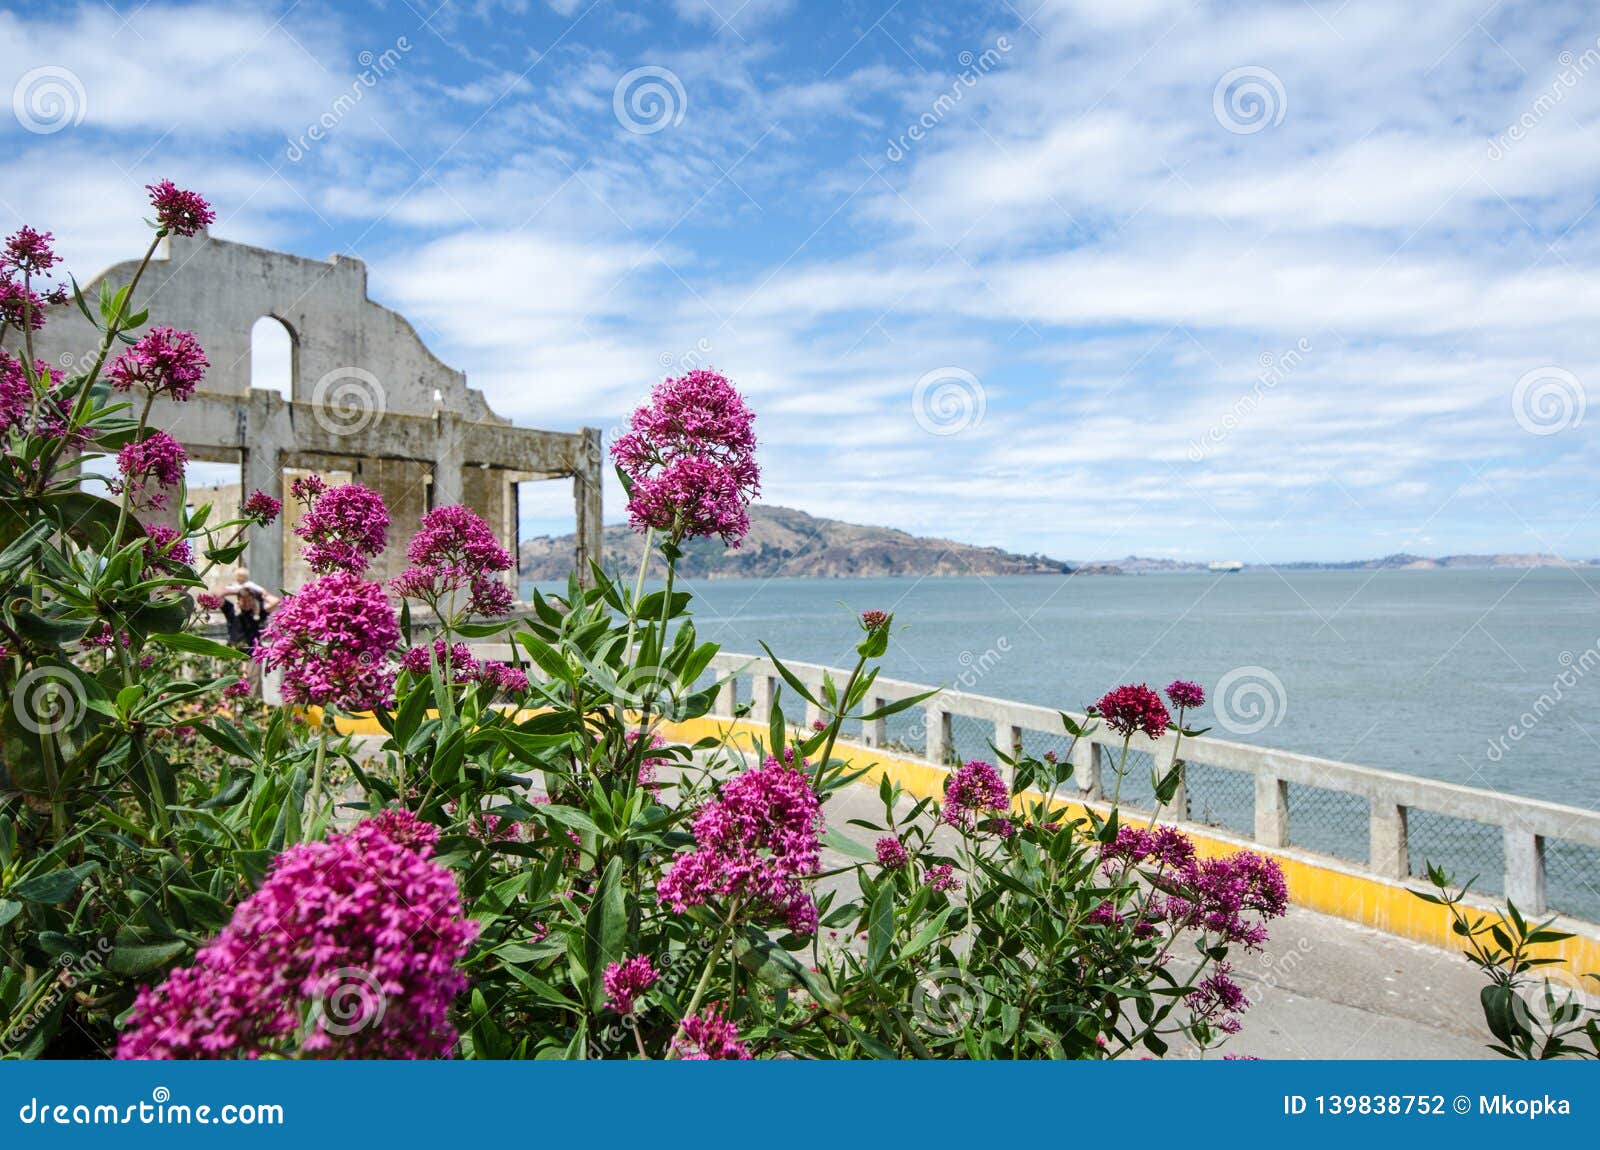 beautiful vivid flower garden scenery on alcatraz island in san